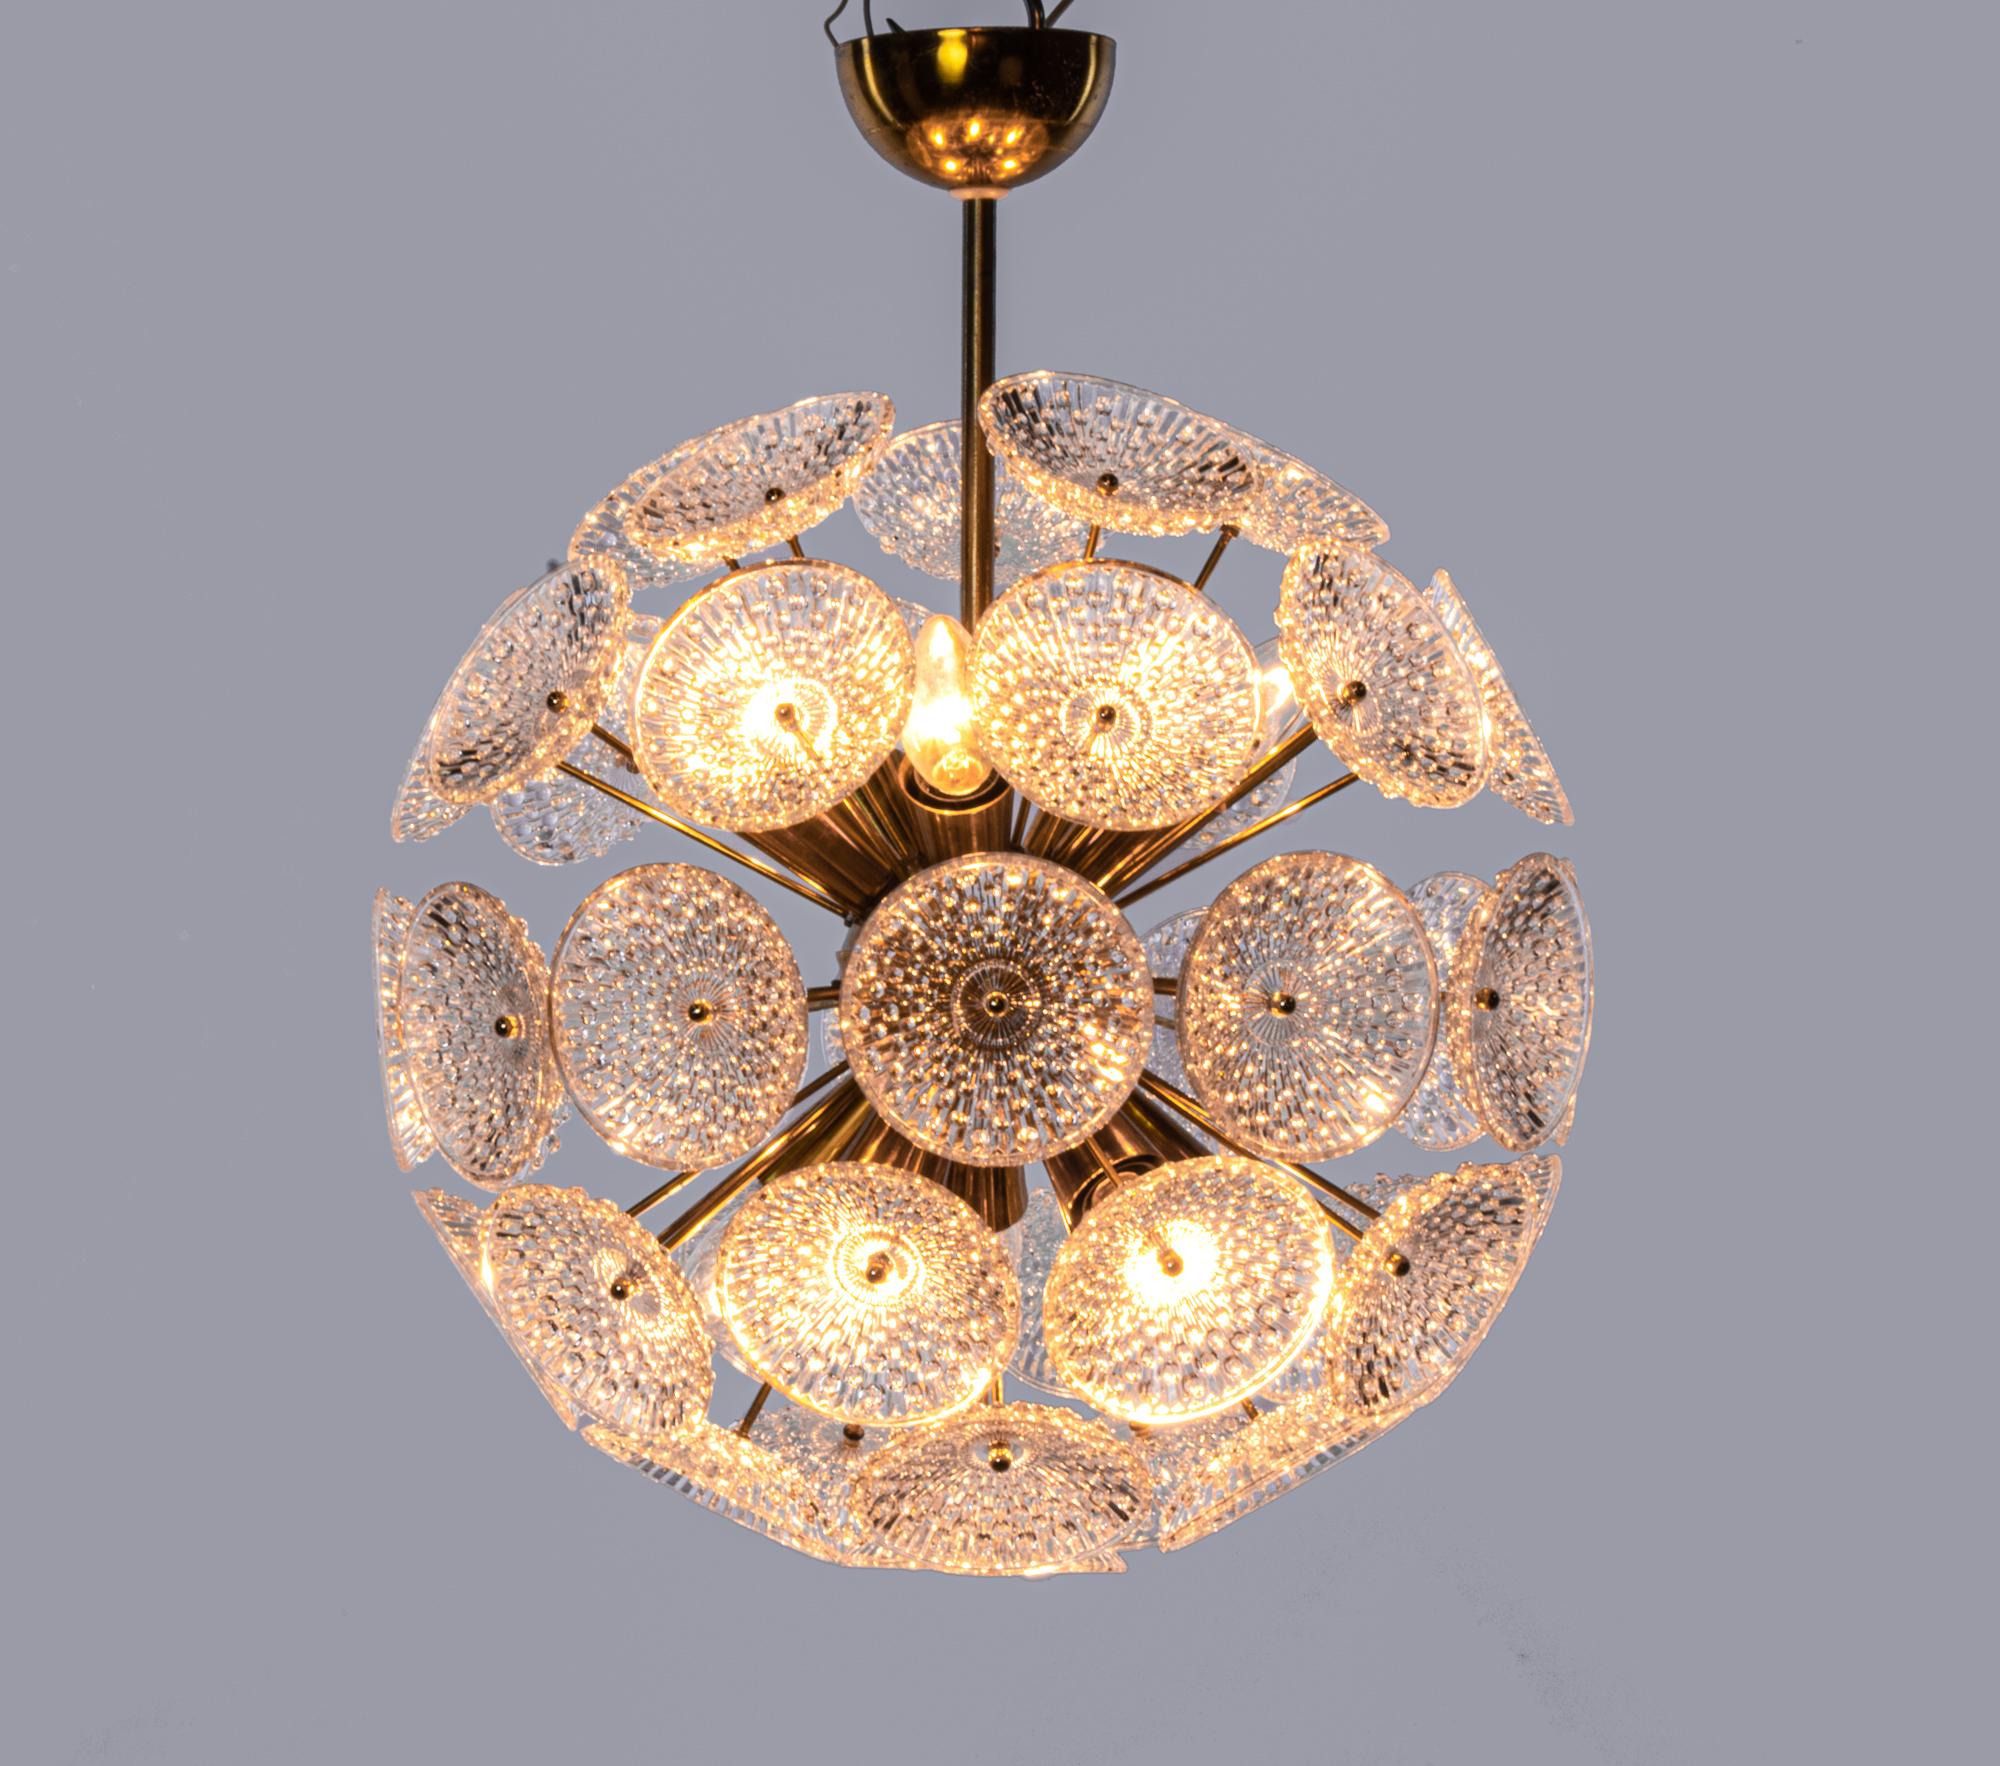 German Modernist Dandelion 10-light Sputnik Chandelier Glass & Brass, 1960s